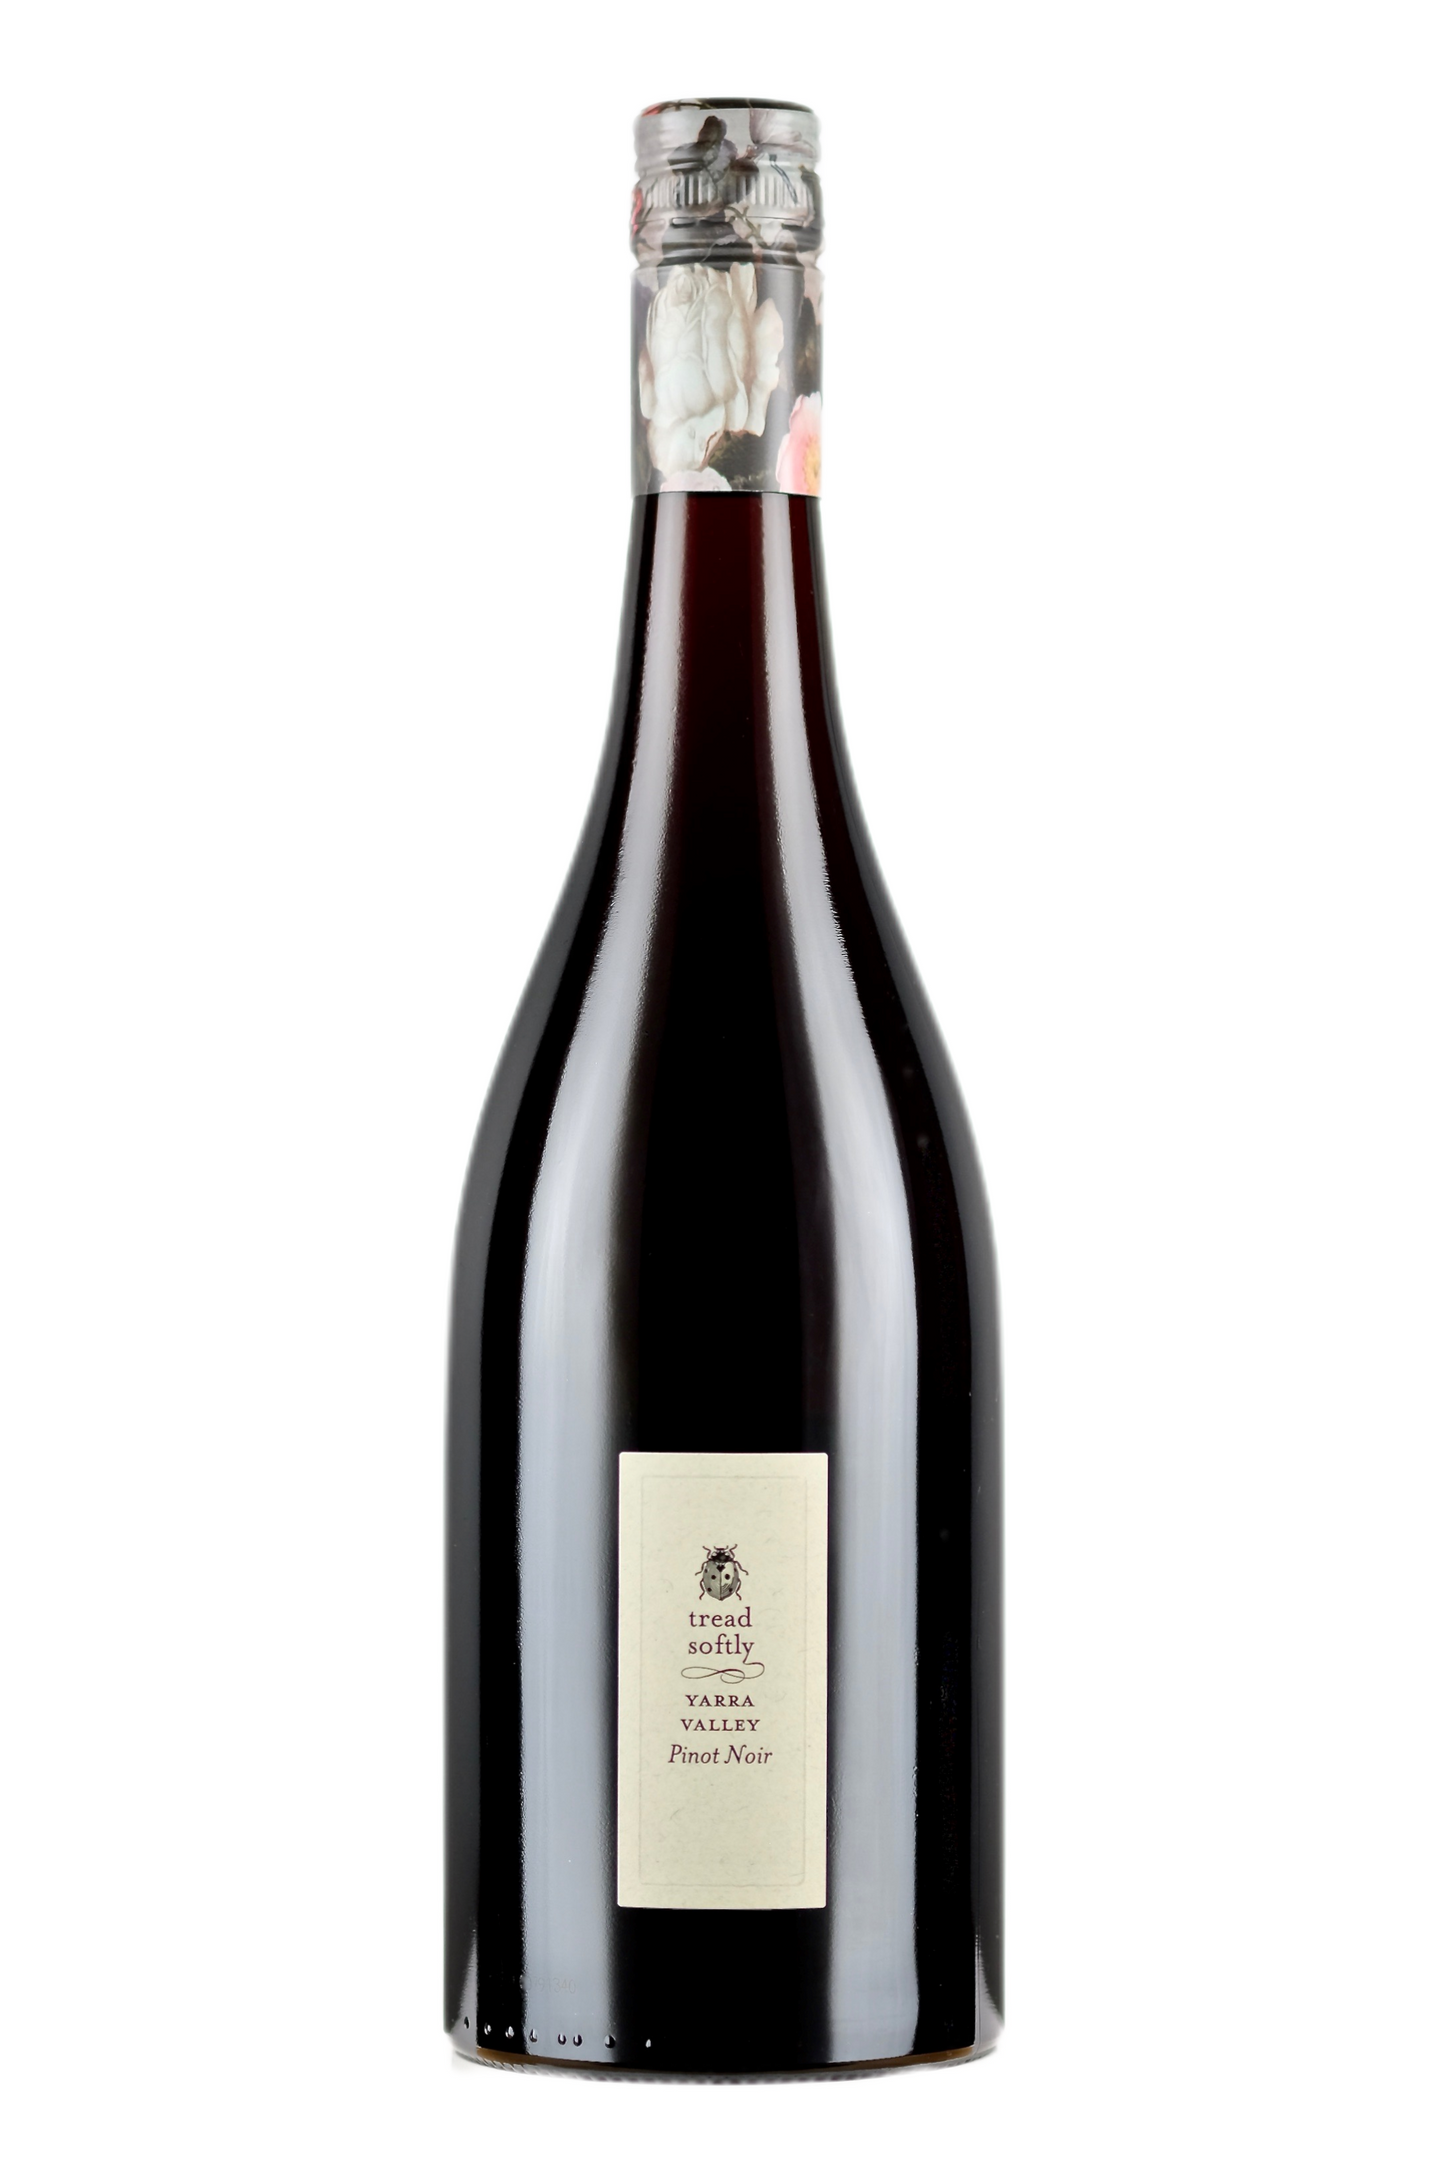 Tread Softly Premium Yarra Valley Pinot Noir